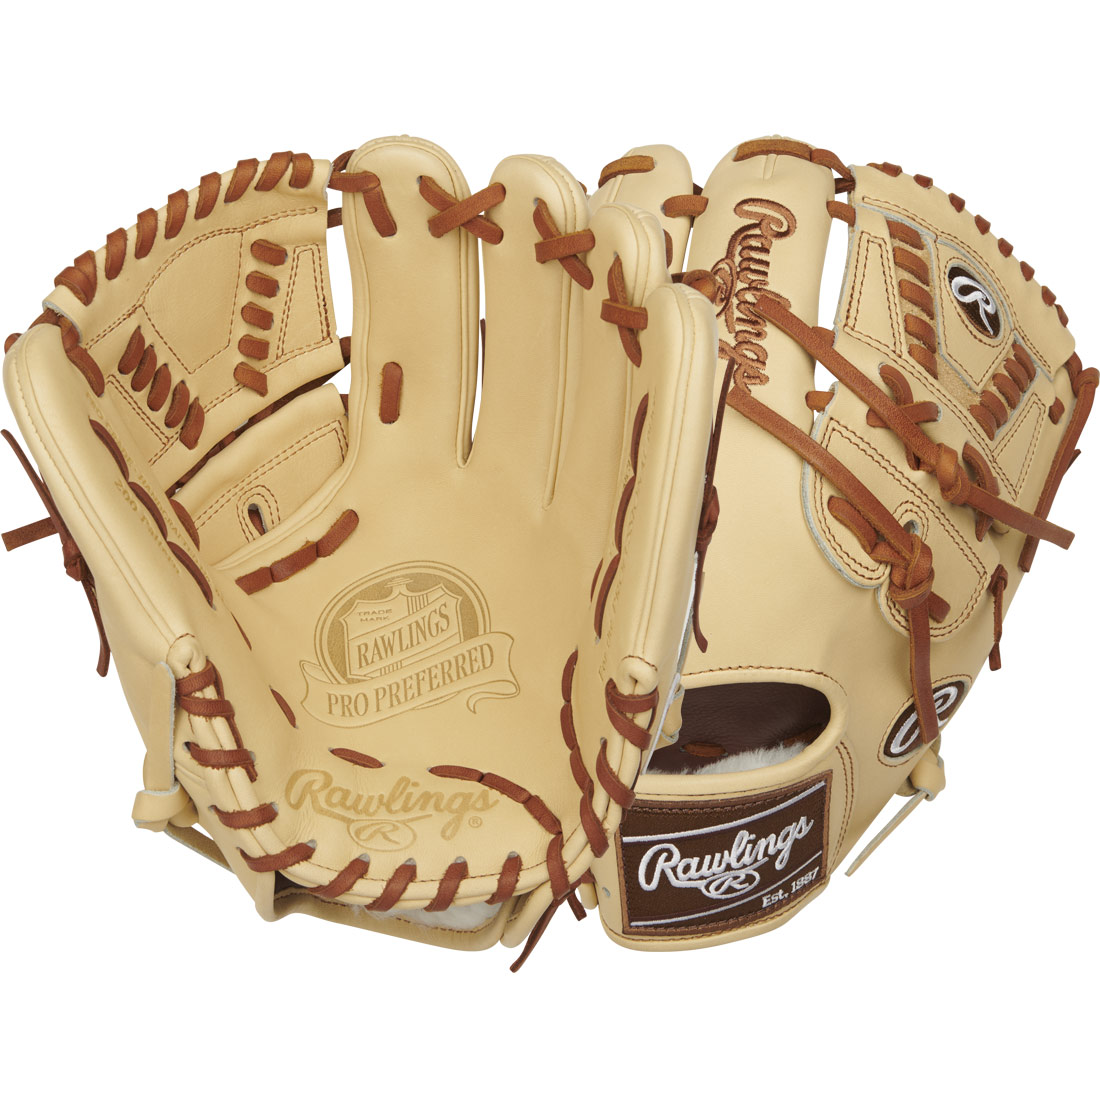 Rawlings Pro Preferred Baseball Glove 11.75\" PROS205-30C